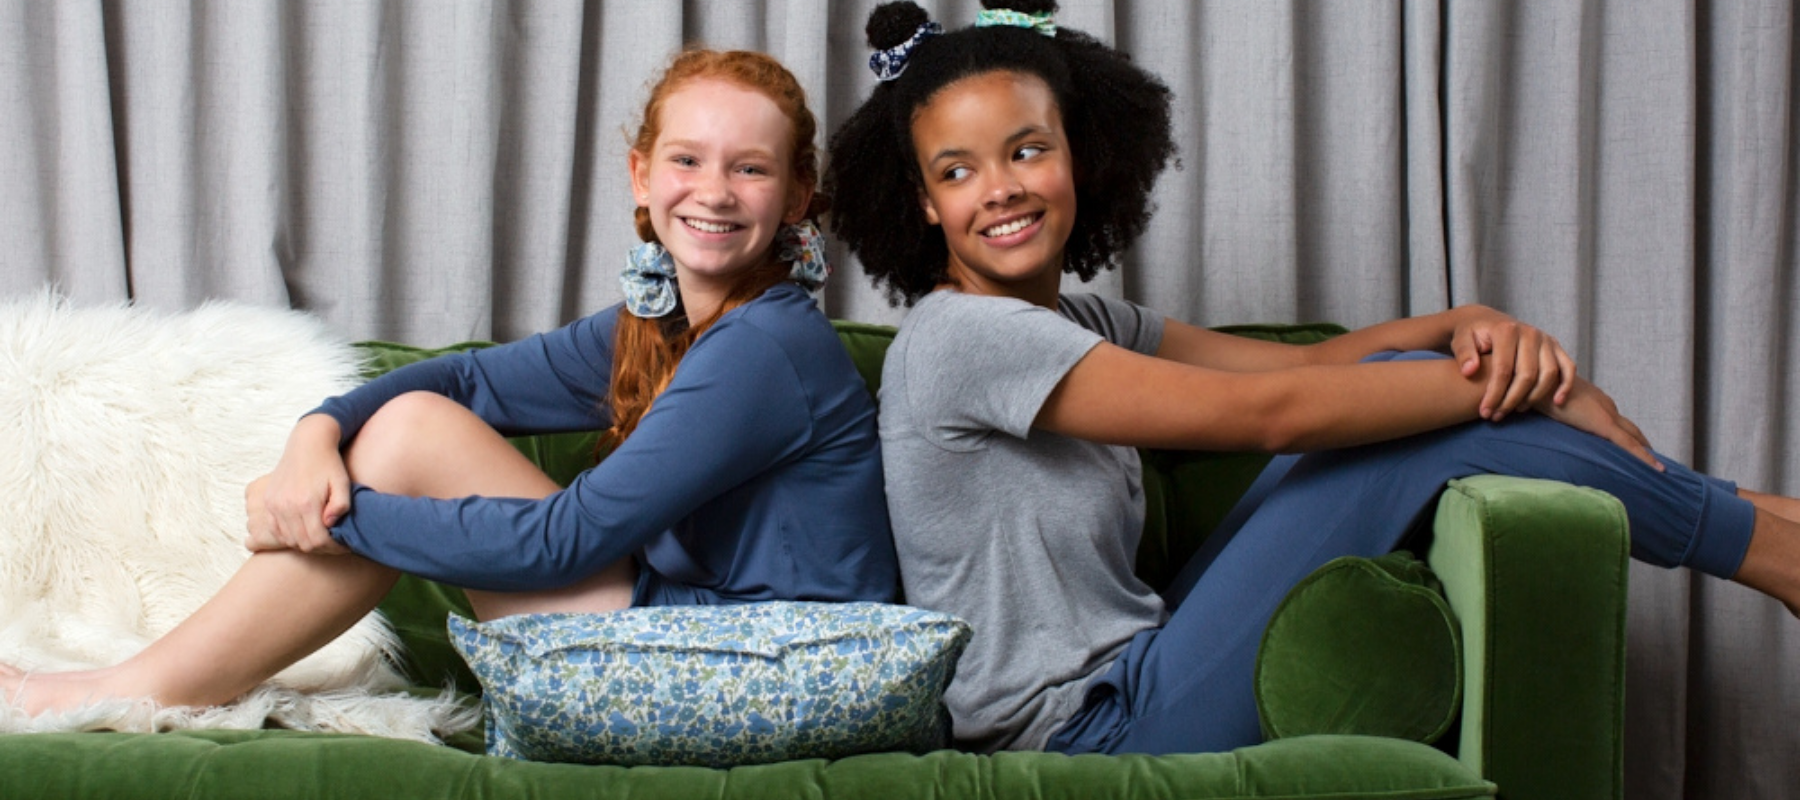 Teenage girls pyjamas Love Haidee Australia winter sleepwear collection